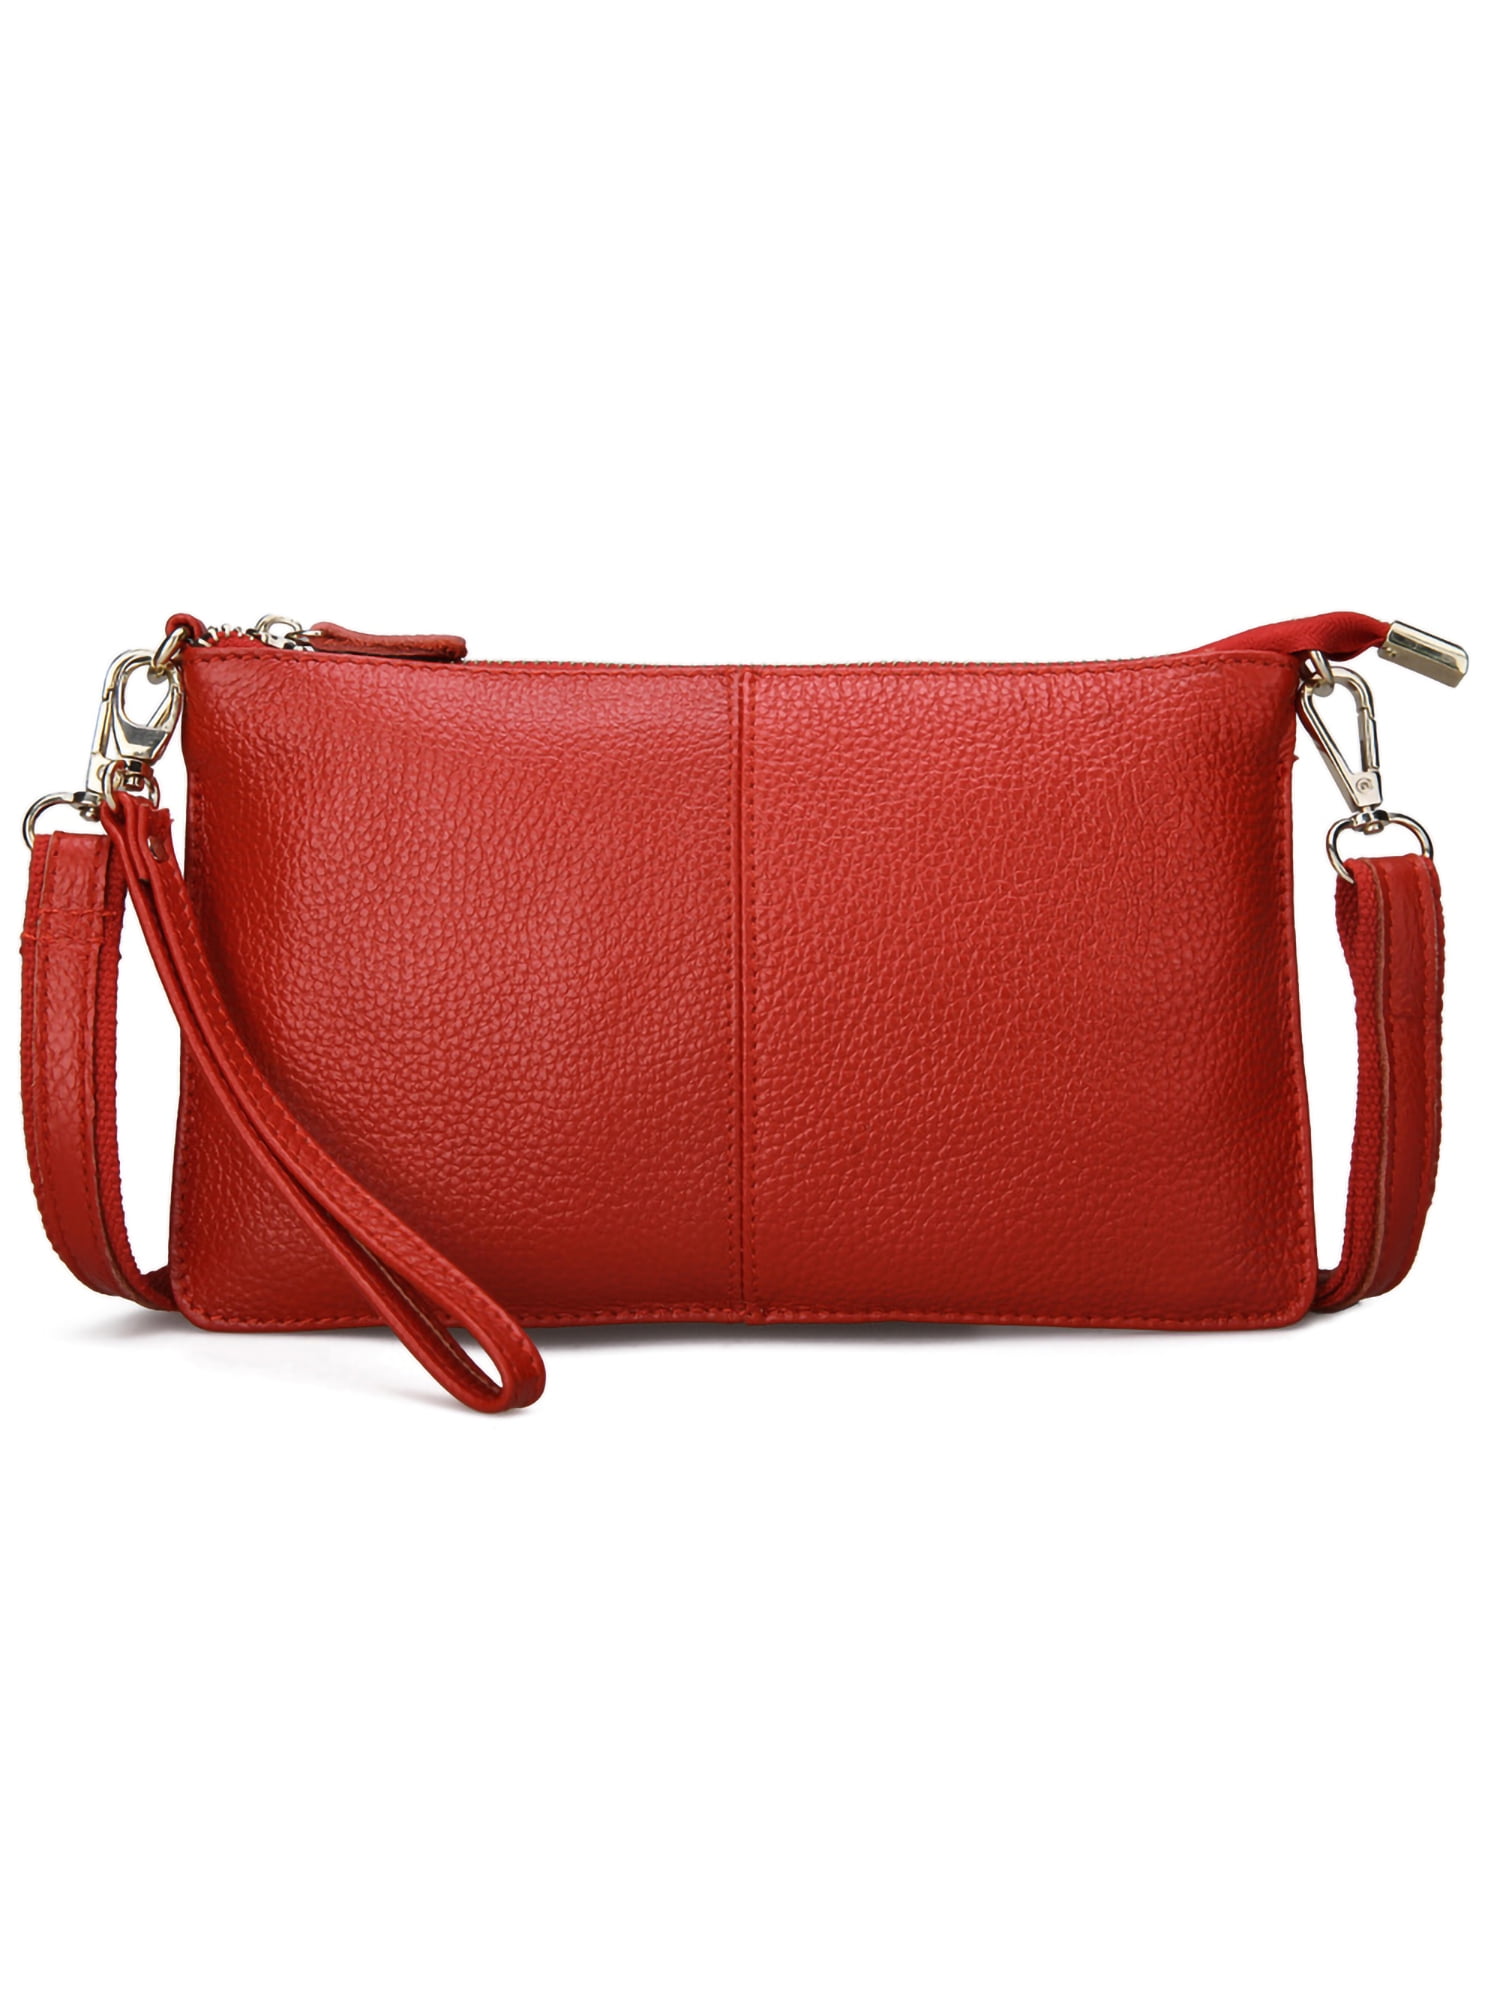 Women's Leather Handbags | Genuine Argentine Leather Handbags for Women —  Pieces Of Argentina